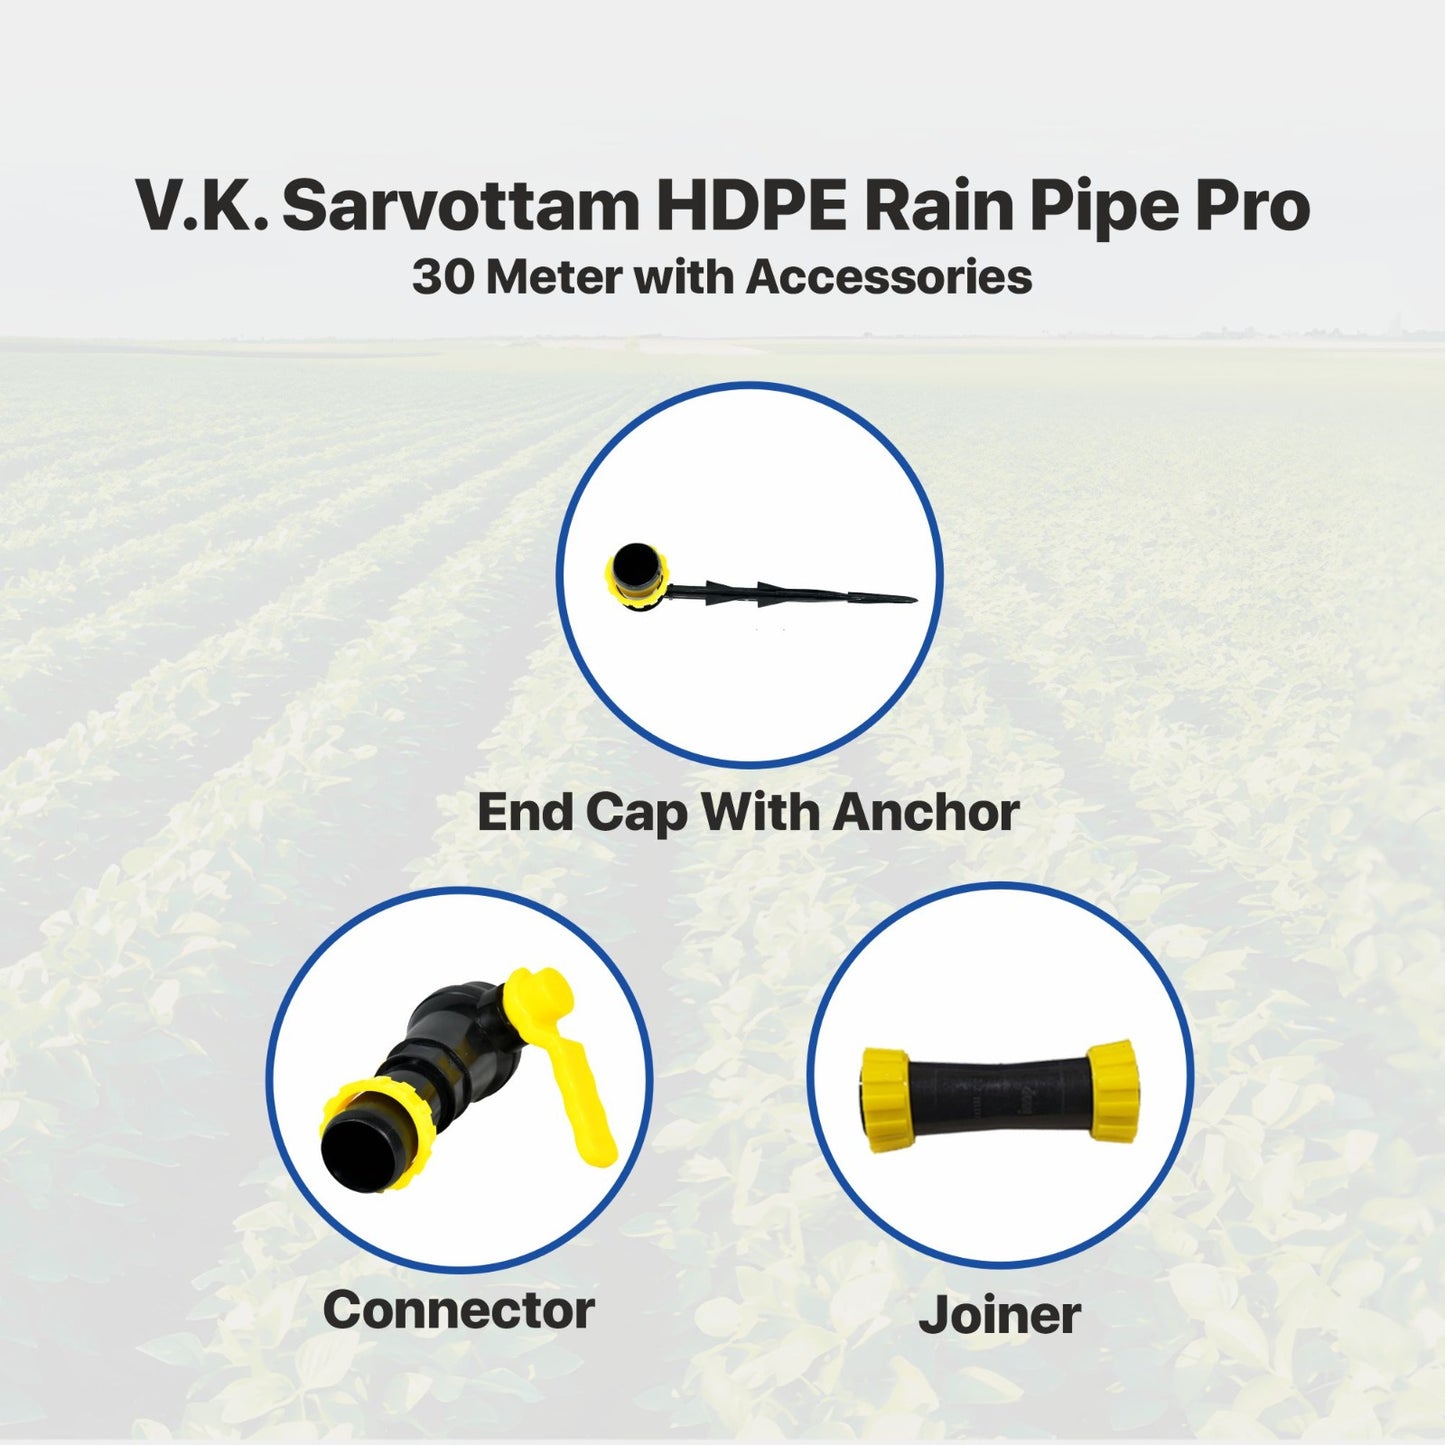 V.K. Sarvottam Rain Pipe PRO (30 Meter) - 1.5 Inch with Accessories